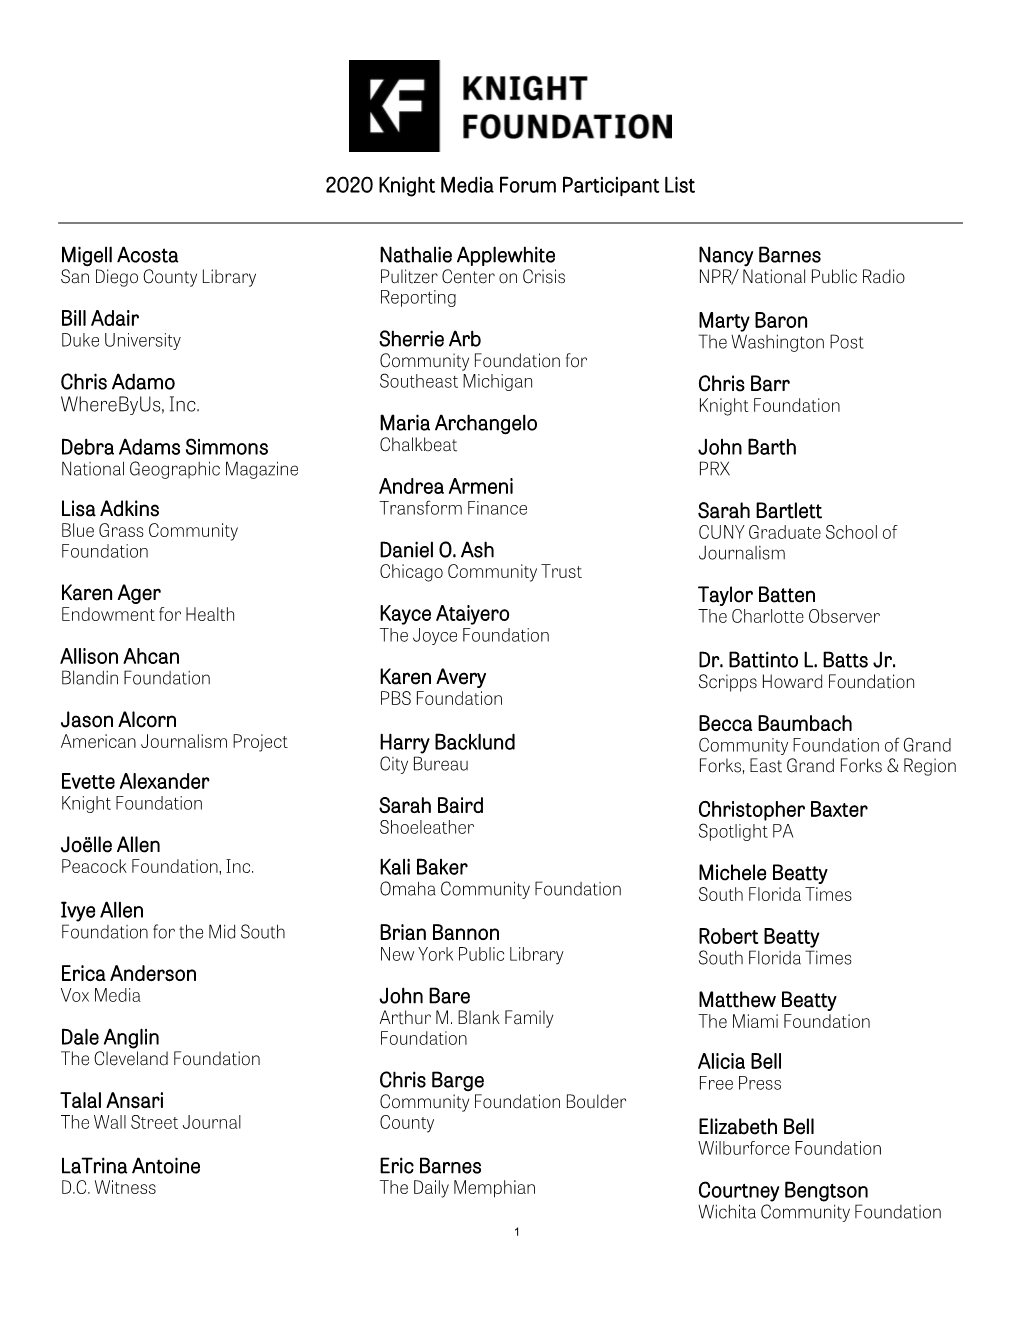 2020 Knight Media Forum Participant List Migell Acosta Bill Adair Chris